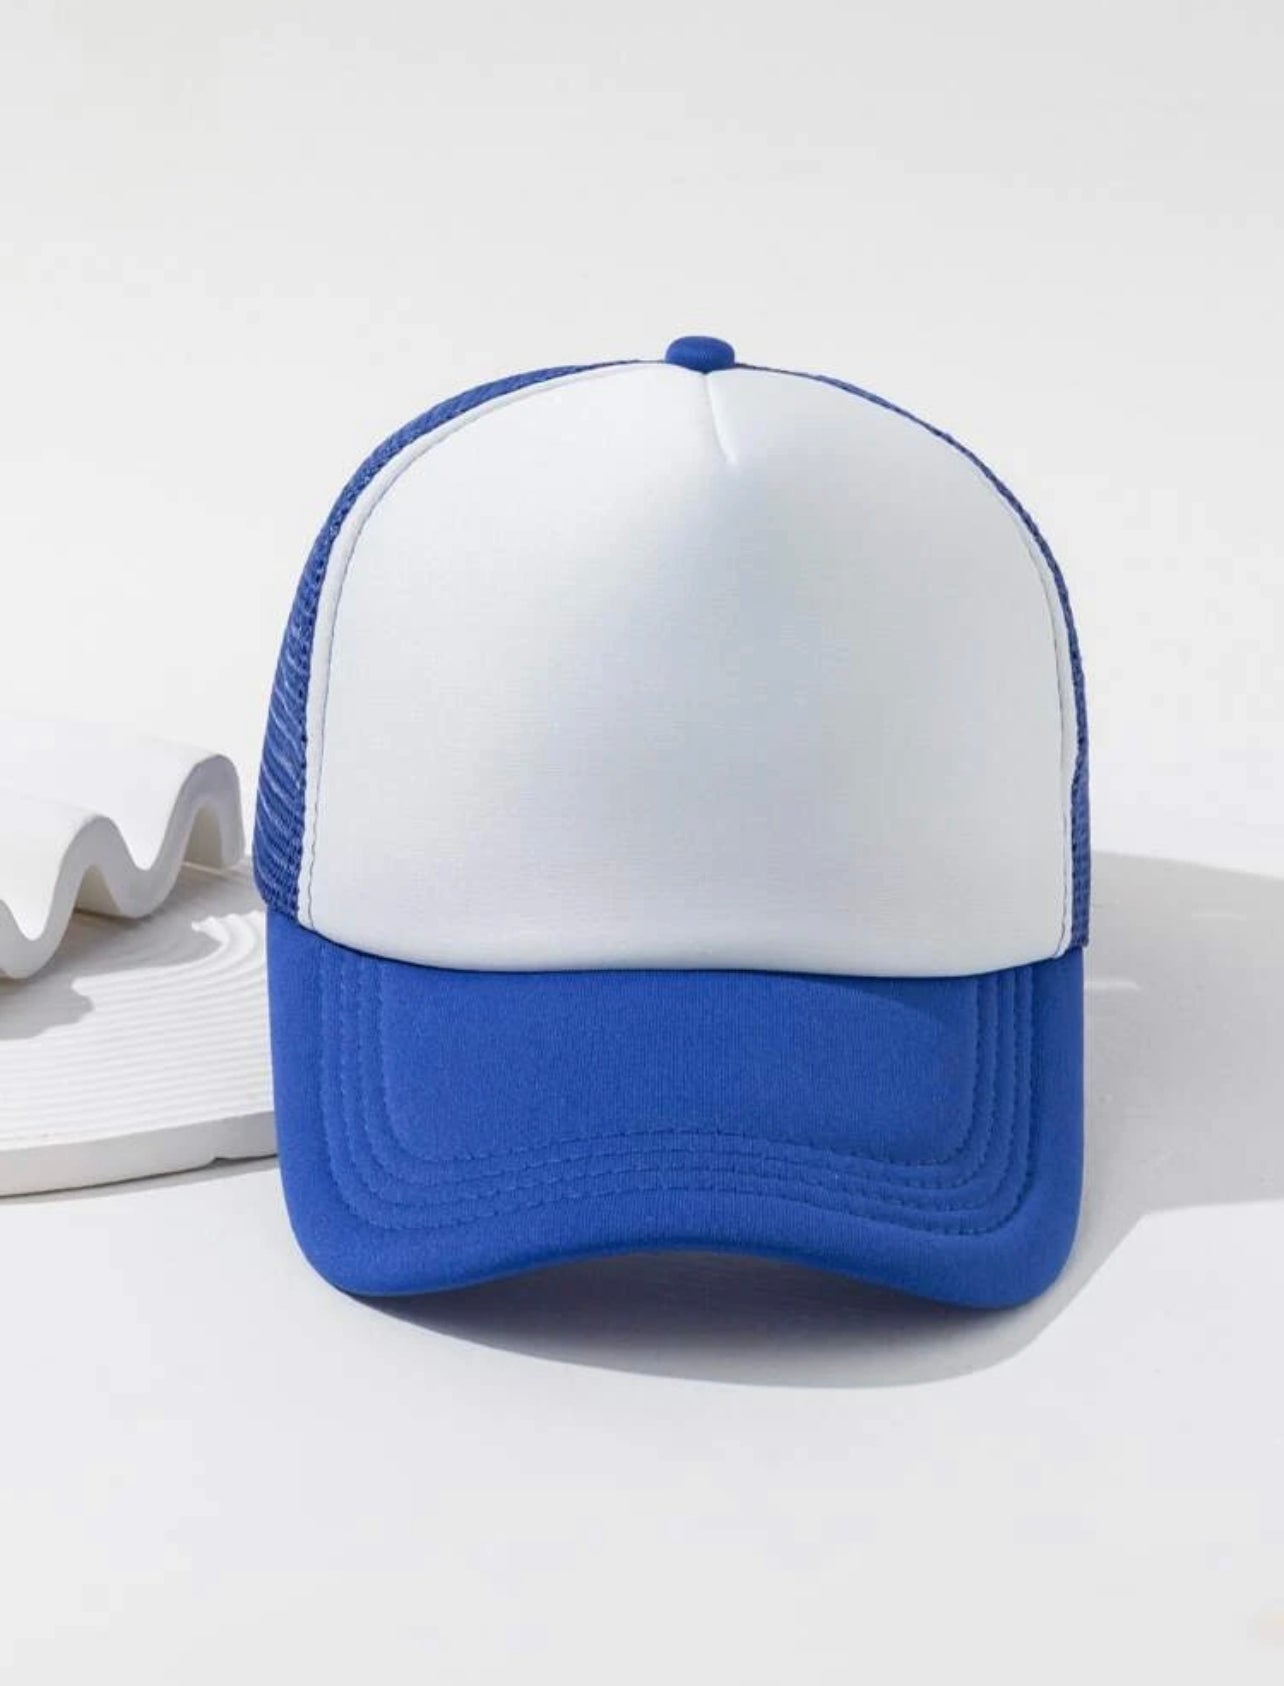 Plus size58-62cm Adult men trucker cap custom sports hat